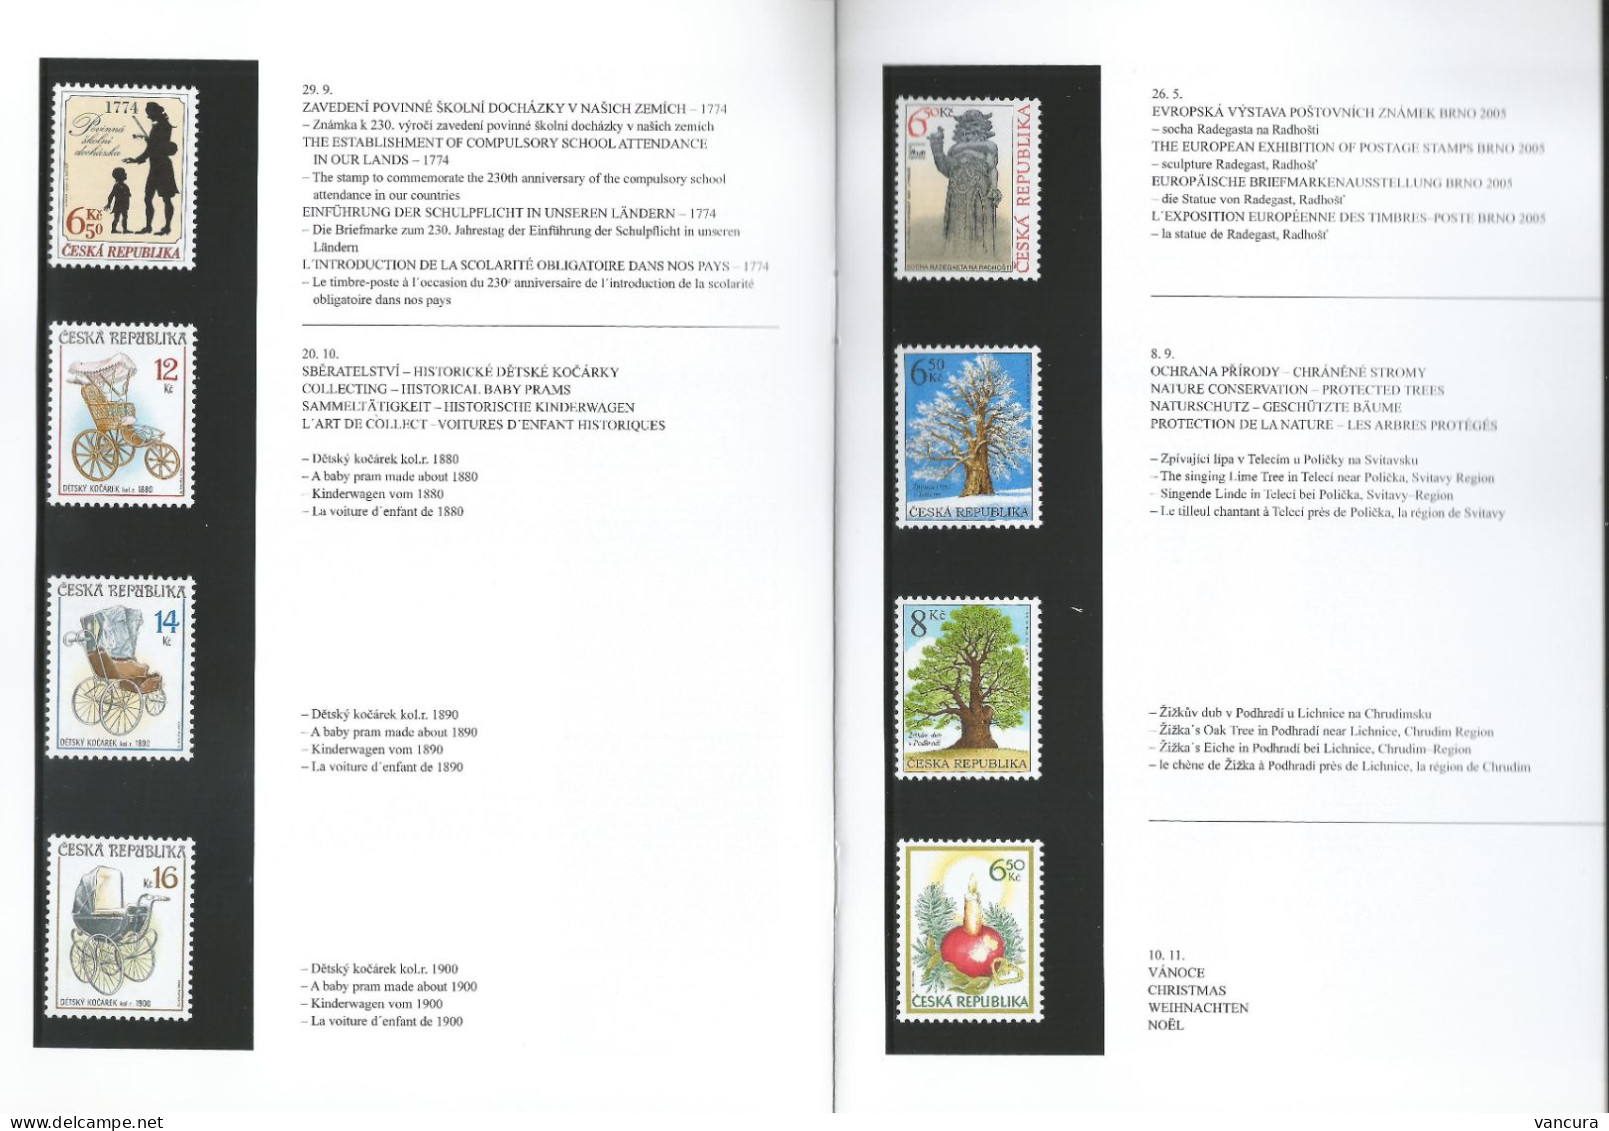 Czech Republic Year Book 2004 (with blackprint)